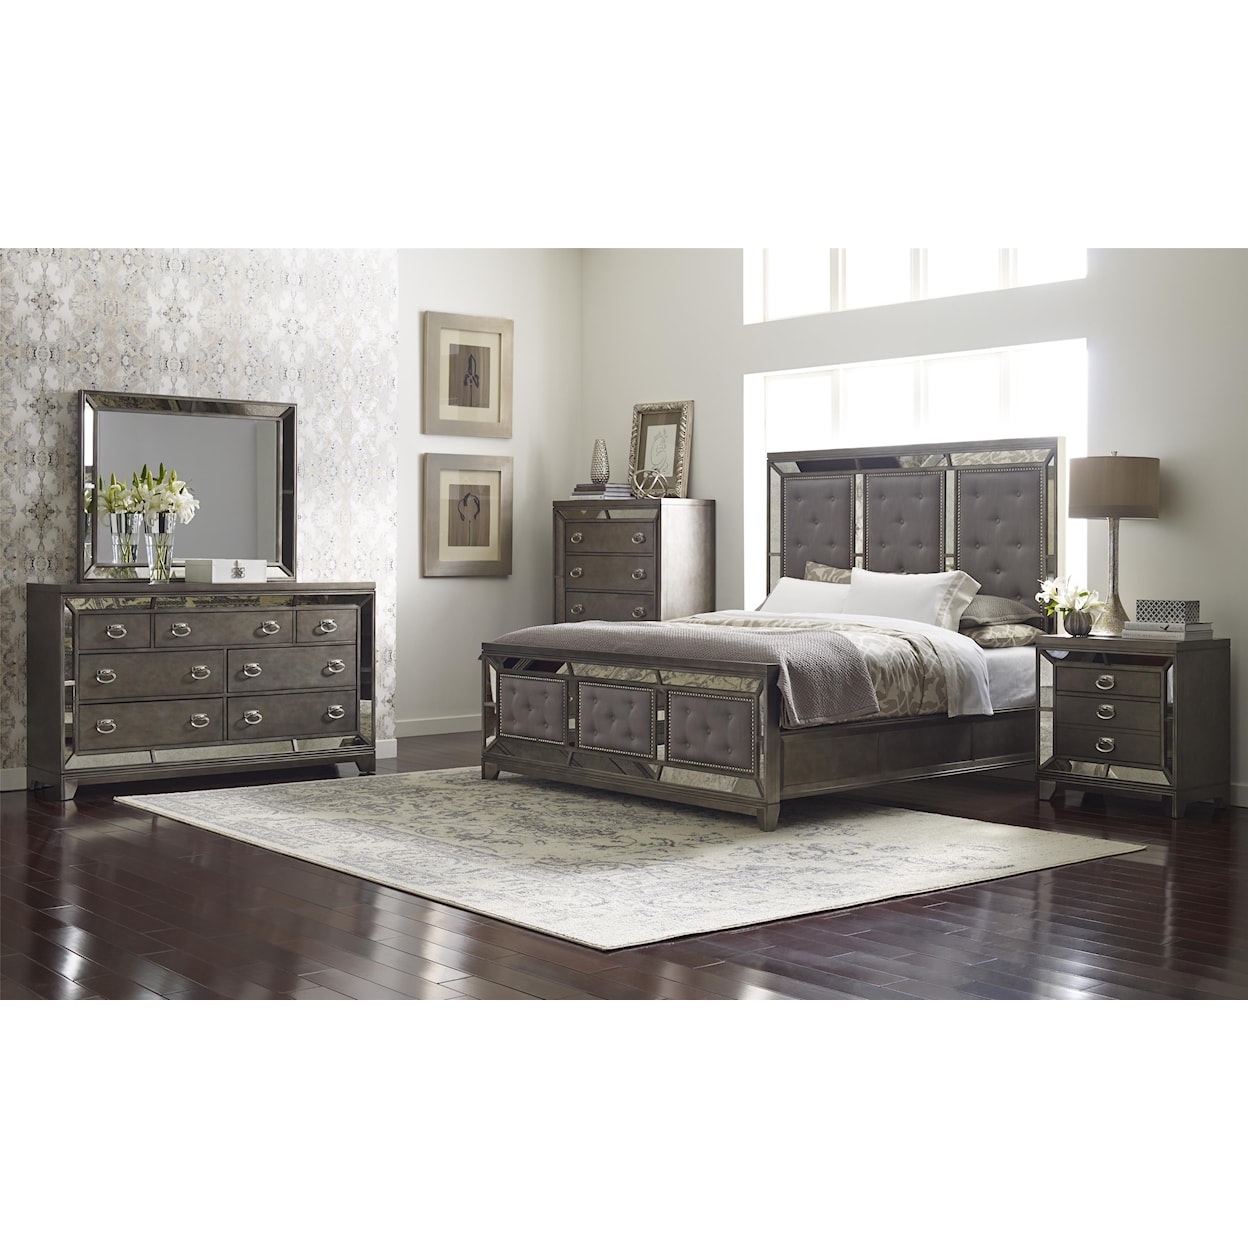 Avalon Furniture Lenox Queen Bedroom Group